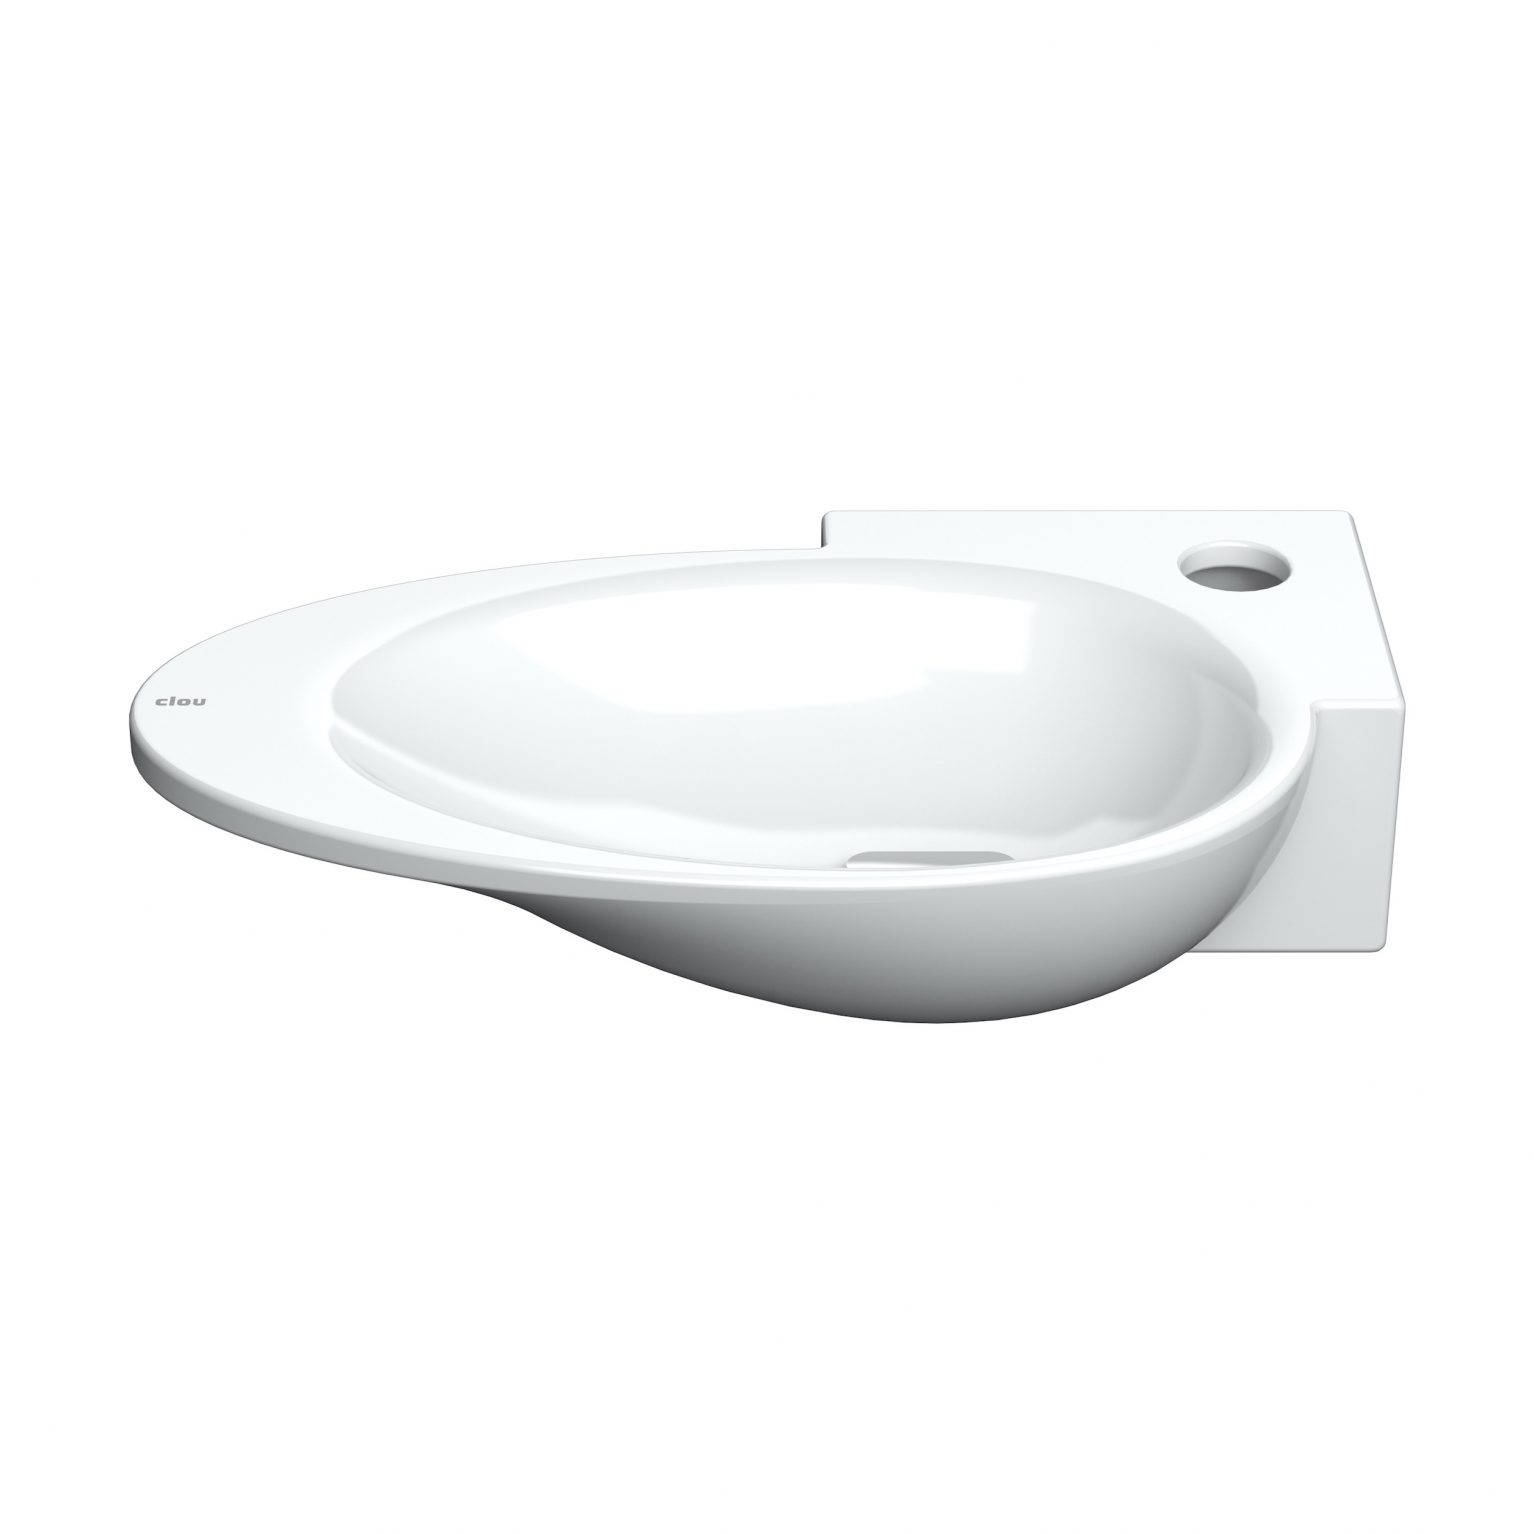 fontein-wastafel-wit-keramiek-toilet-badkamer-luxe-sanitair-First-rechts-clou-CL0303100-wasbakje-met-afvoer-plug-kranenbank-kraangat